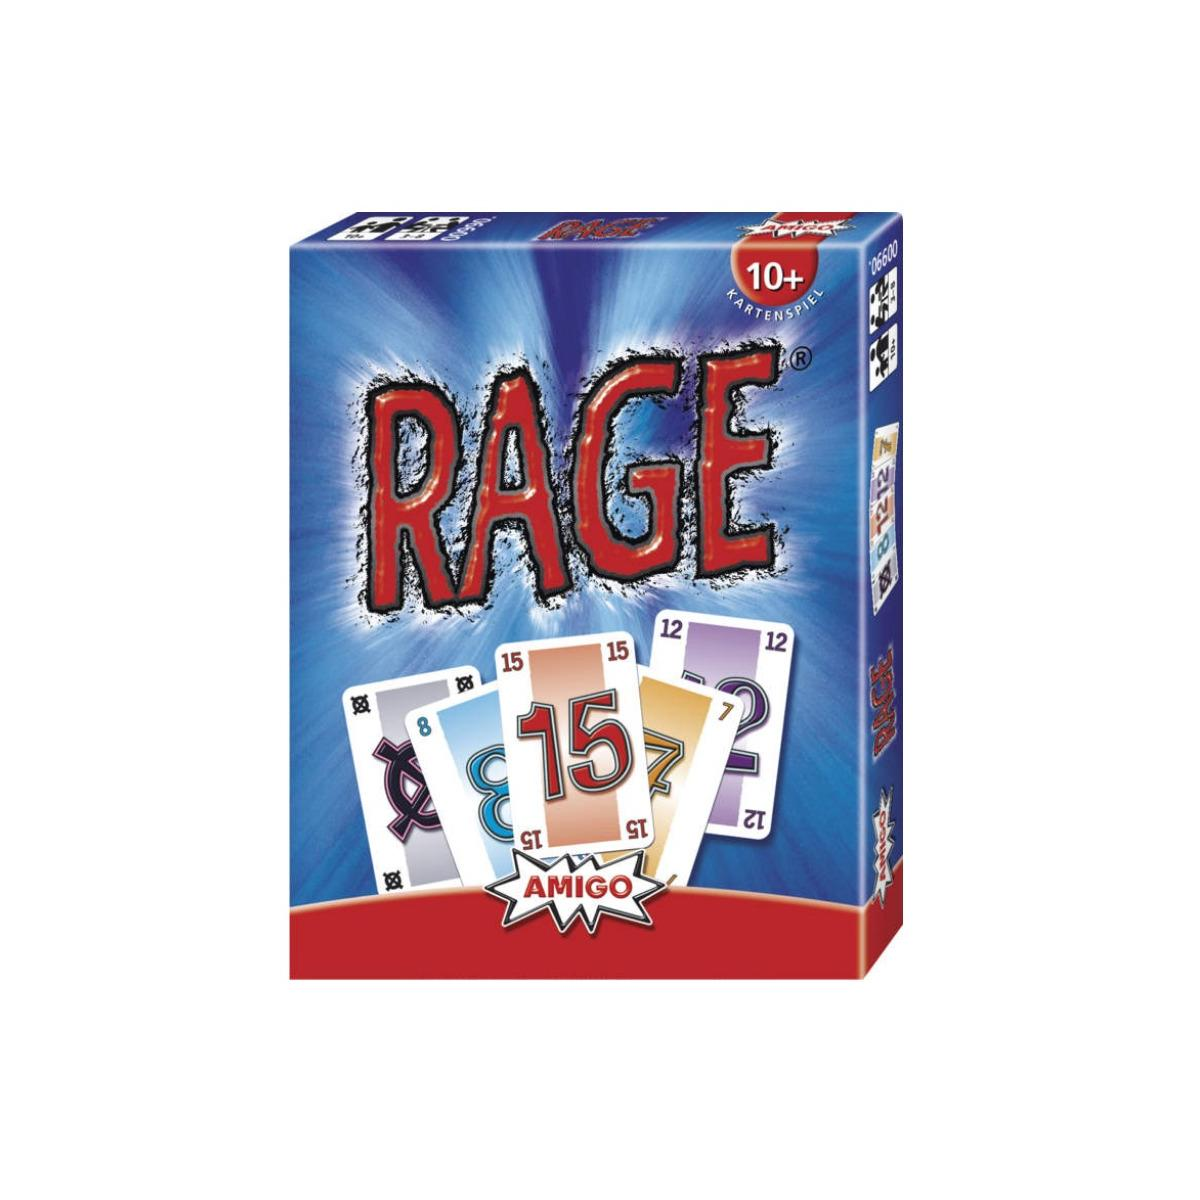 AMIGO 990 RAGE Rage